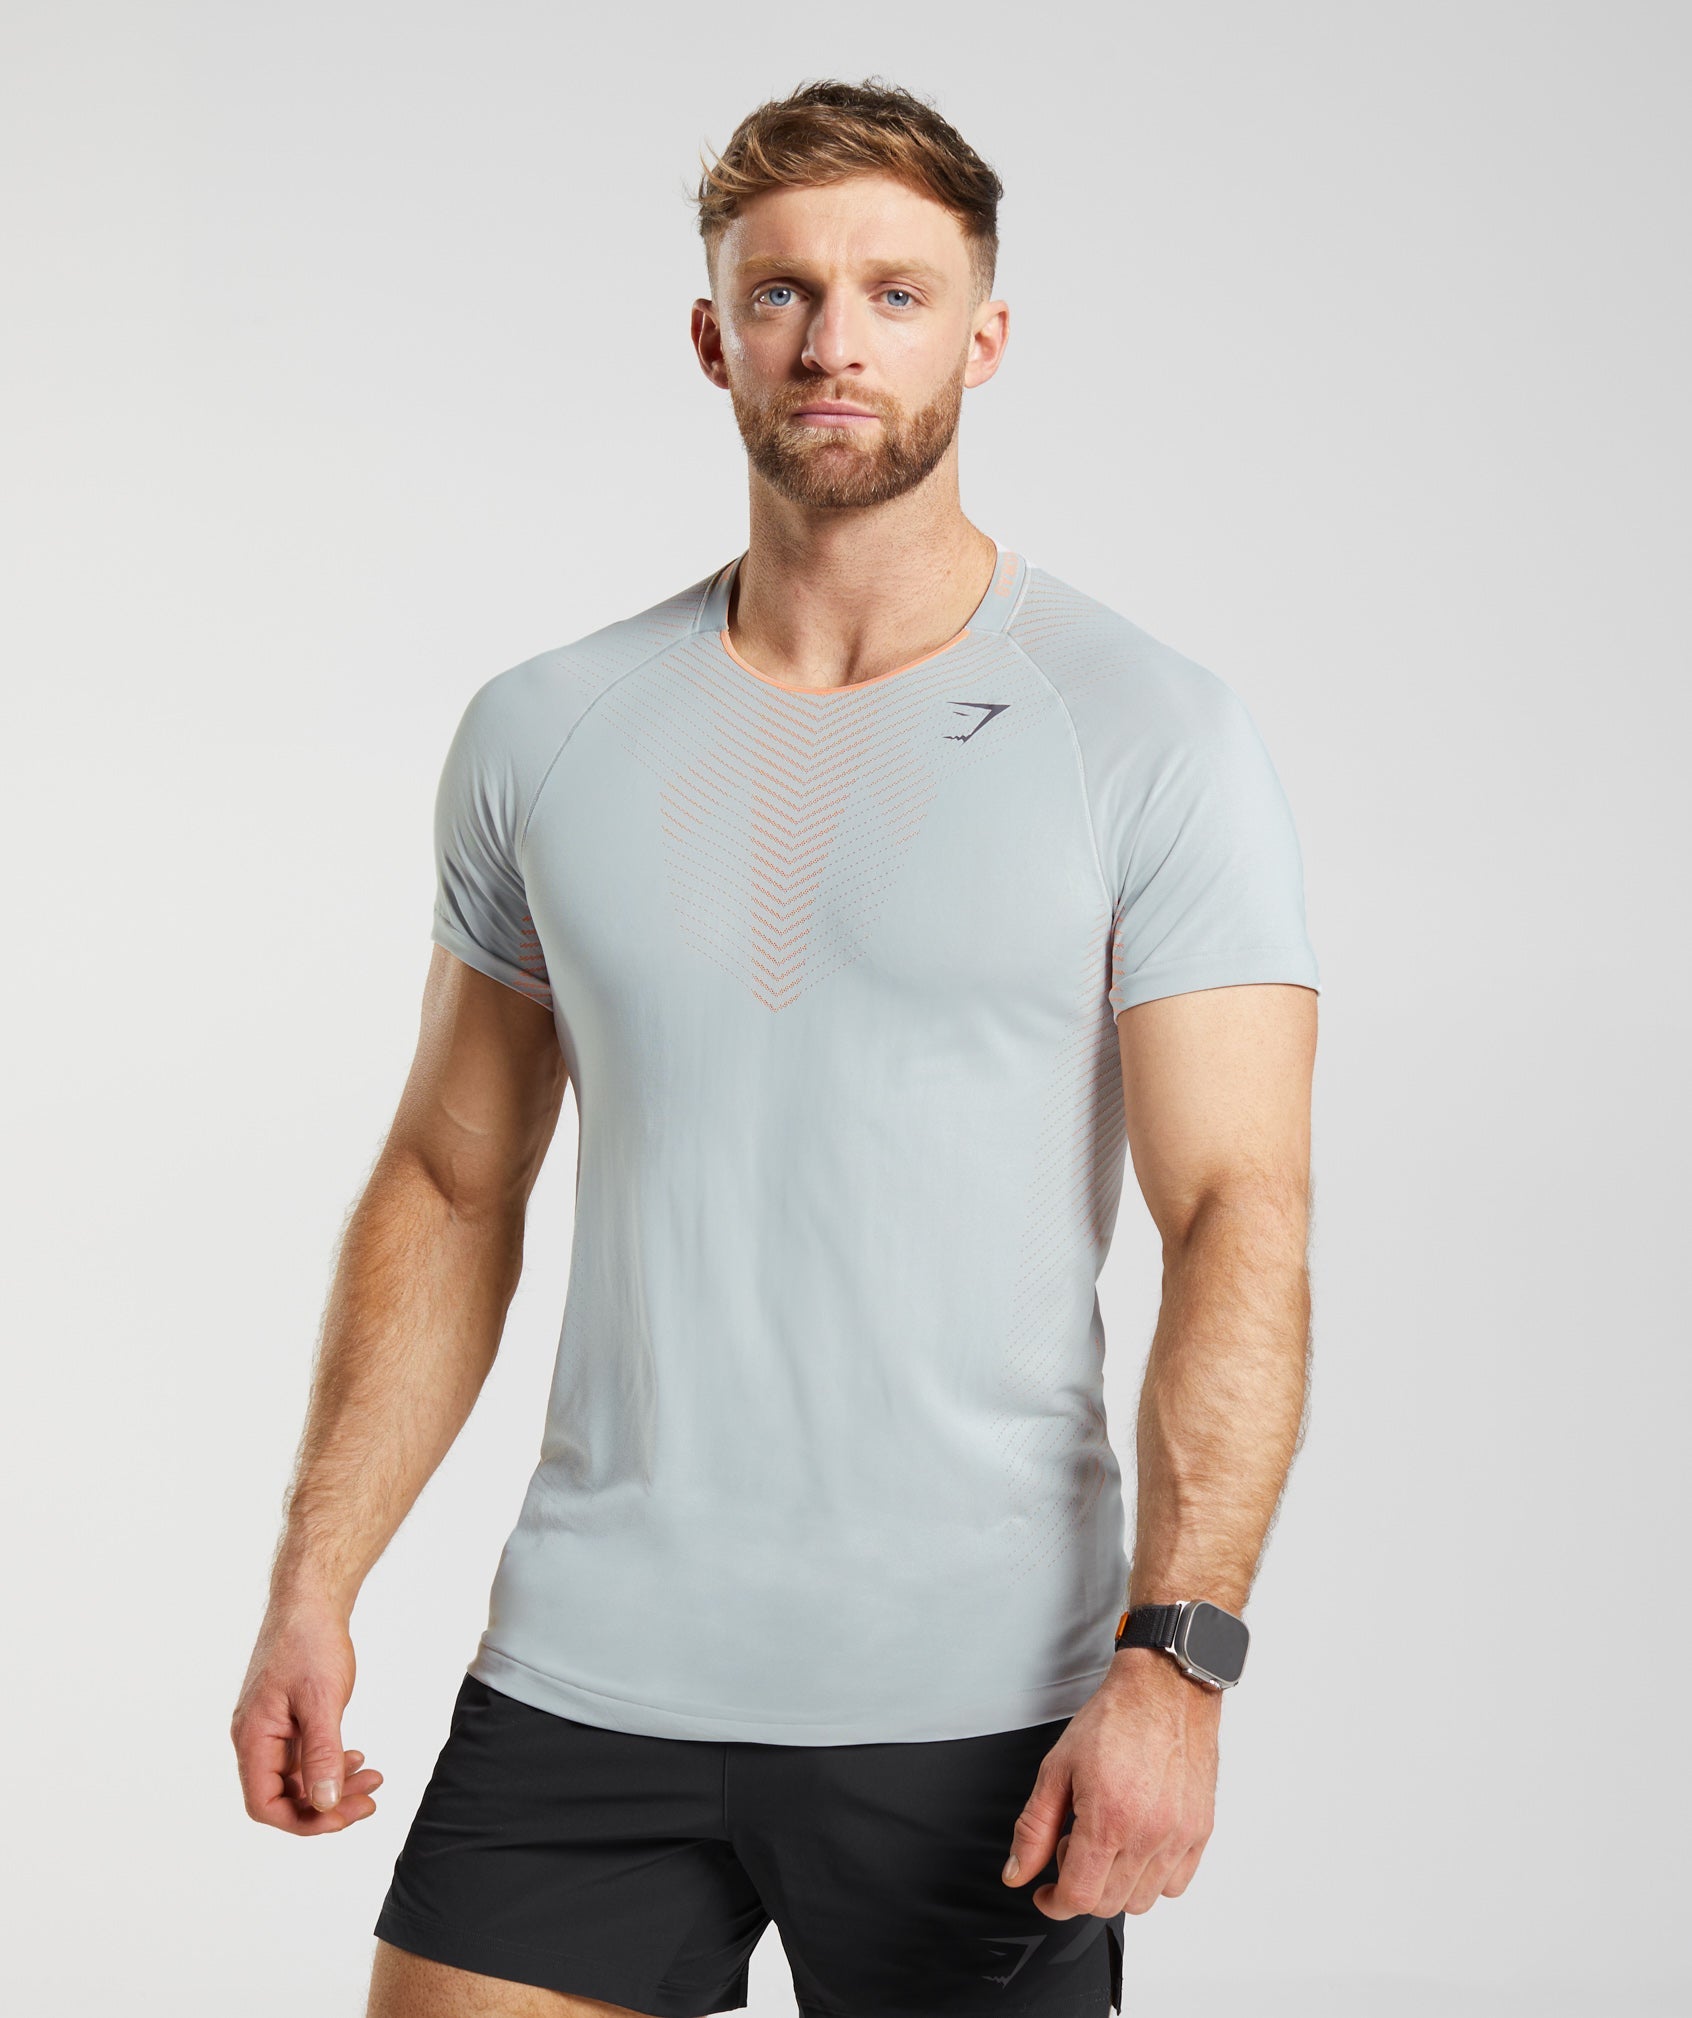 Blush Collection Seamless Tank light grey – Fitico Sportswear